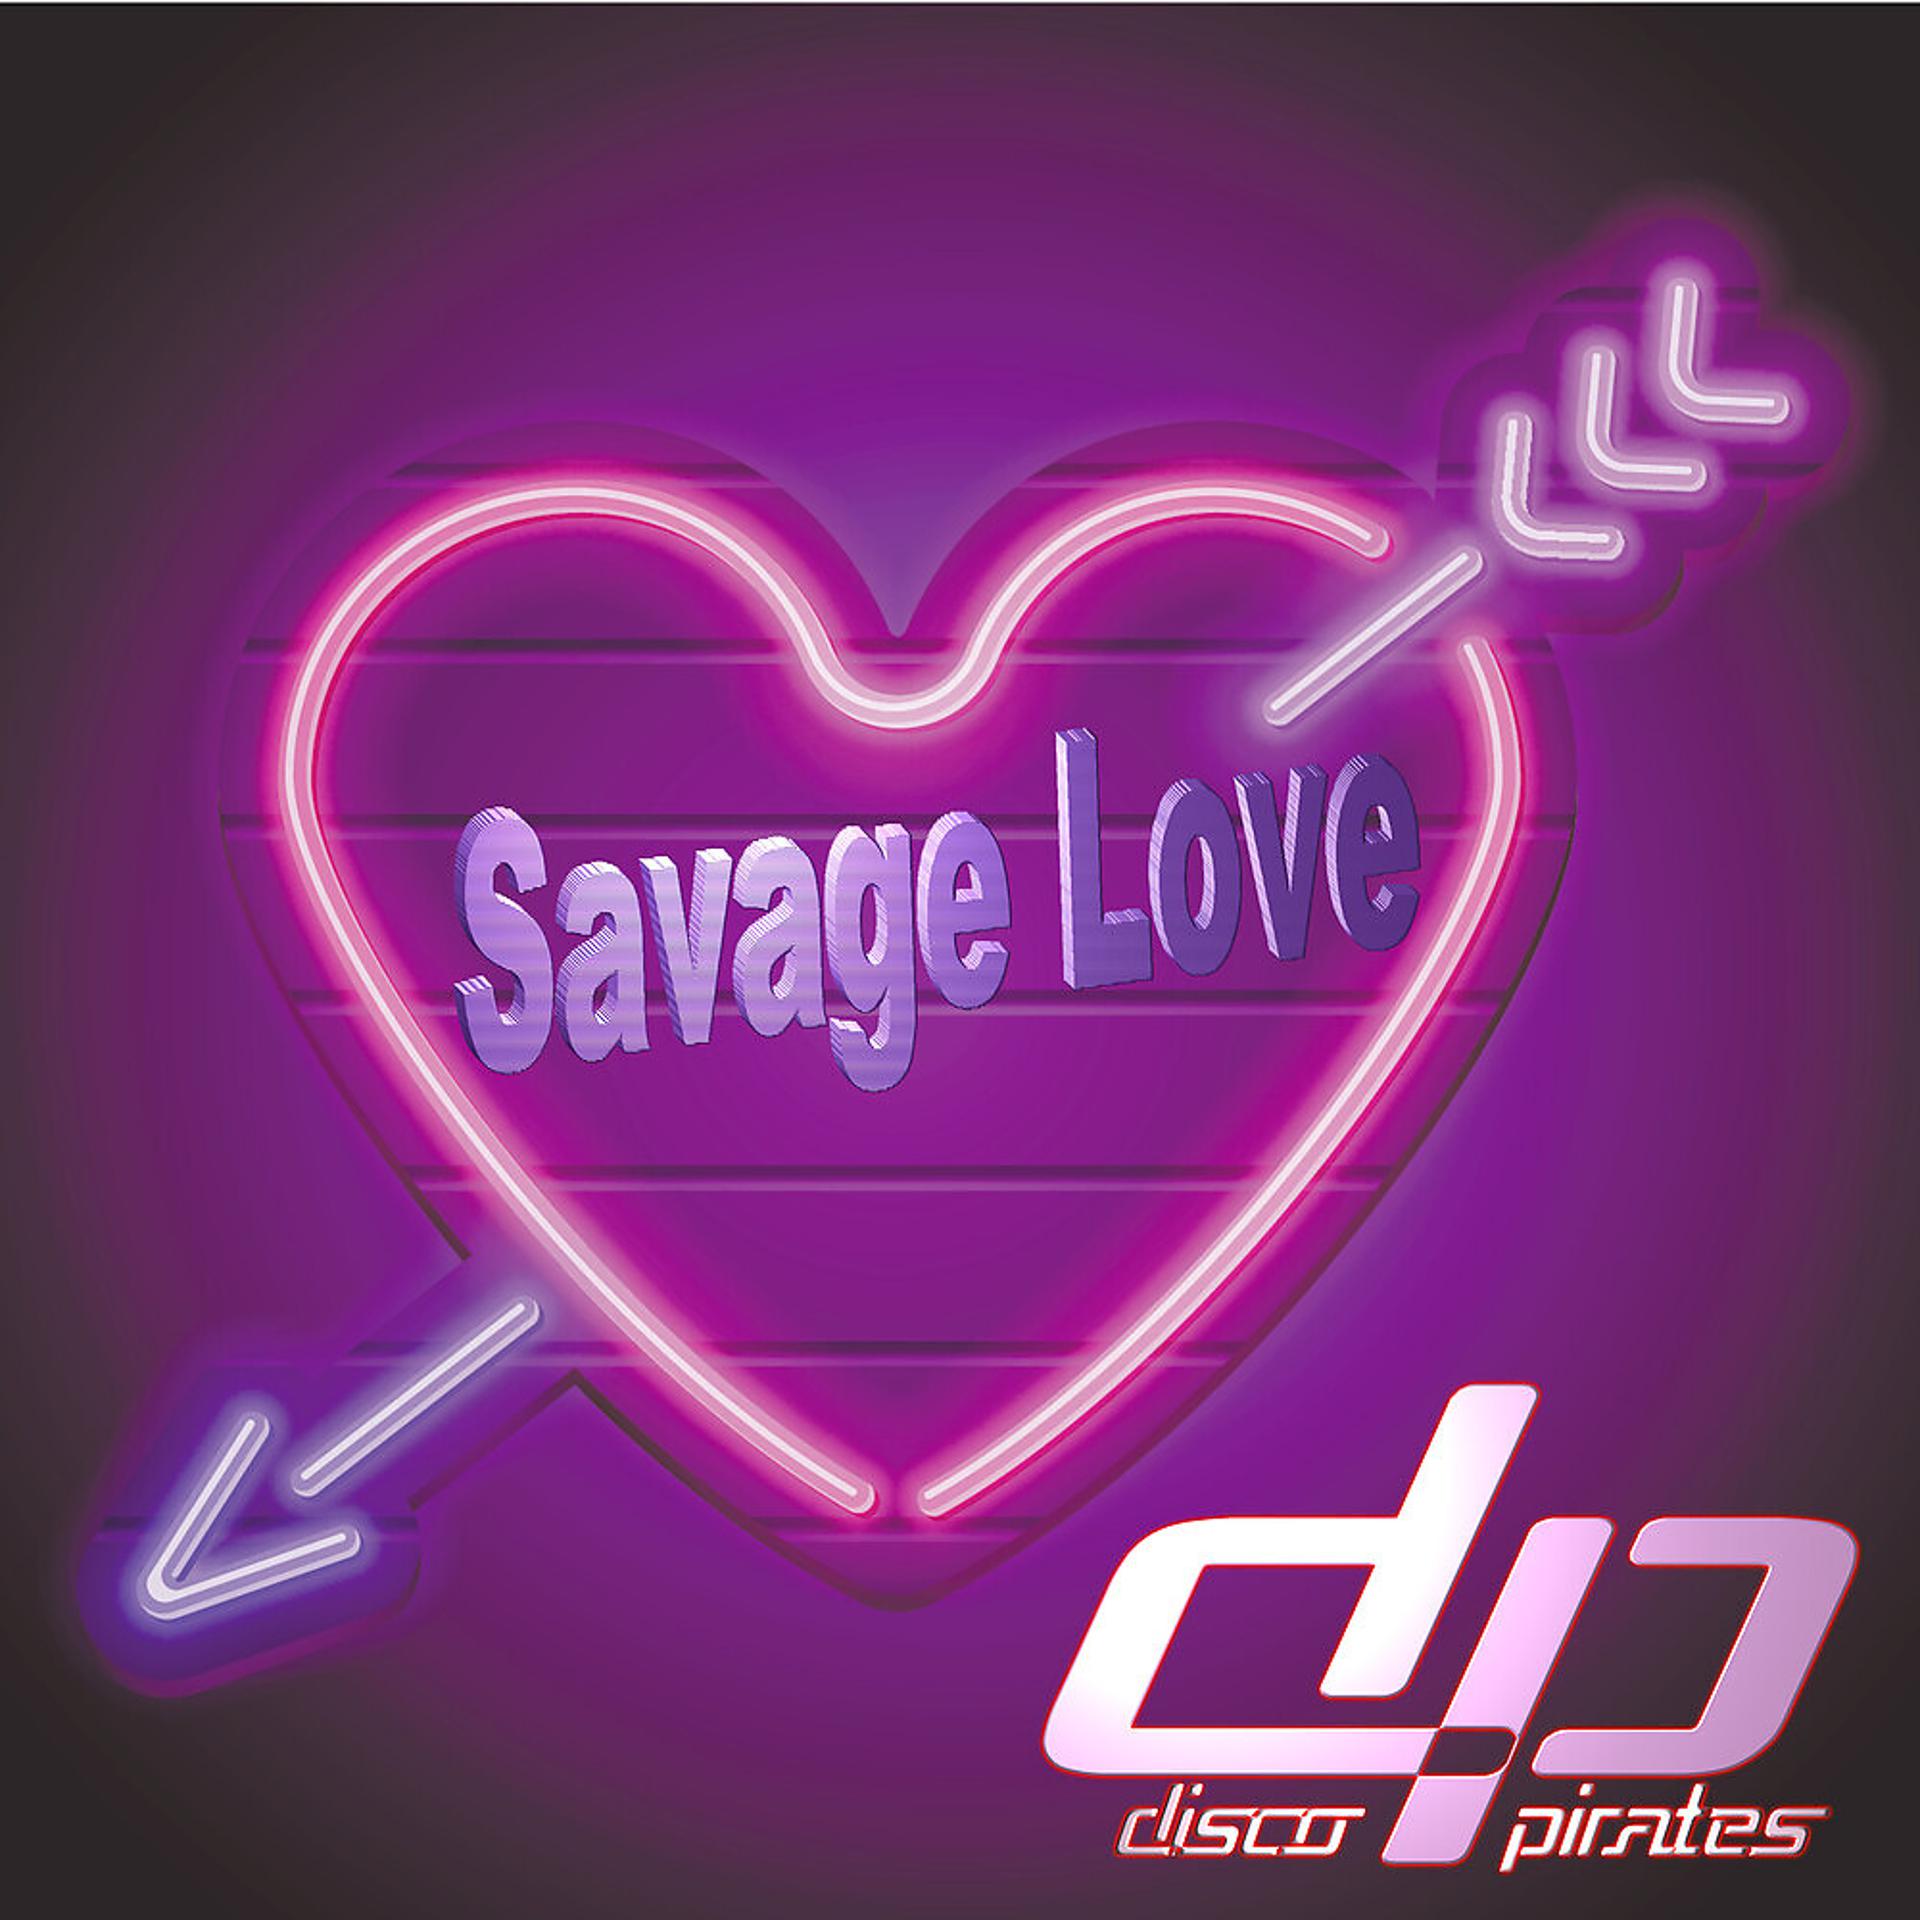 Постер альбома Savage Love (Laxed - Siren Beat)